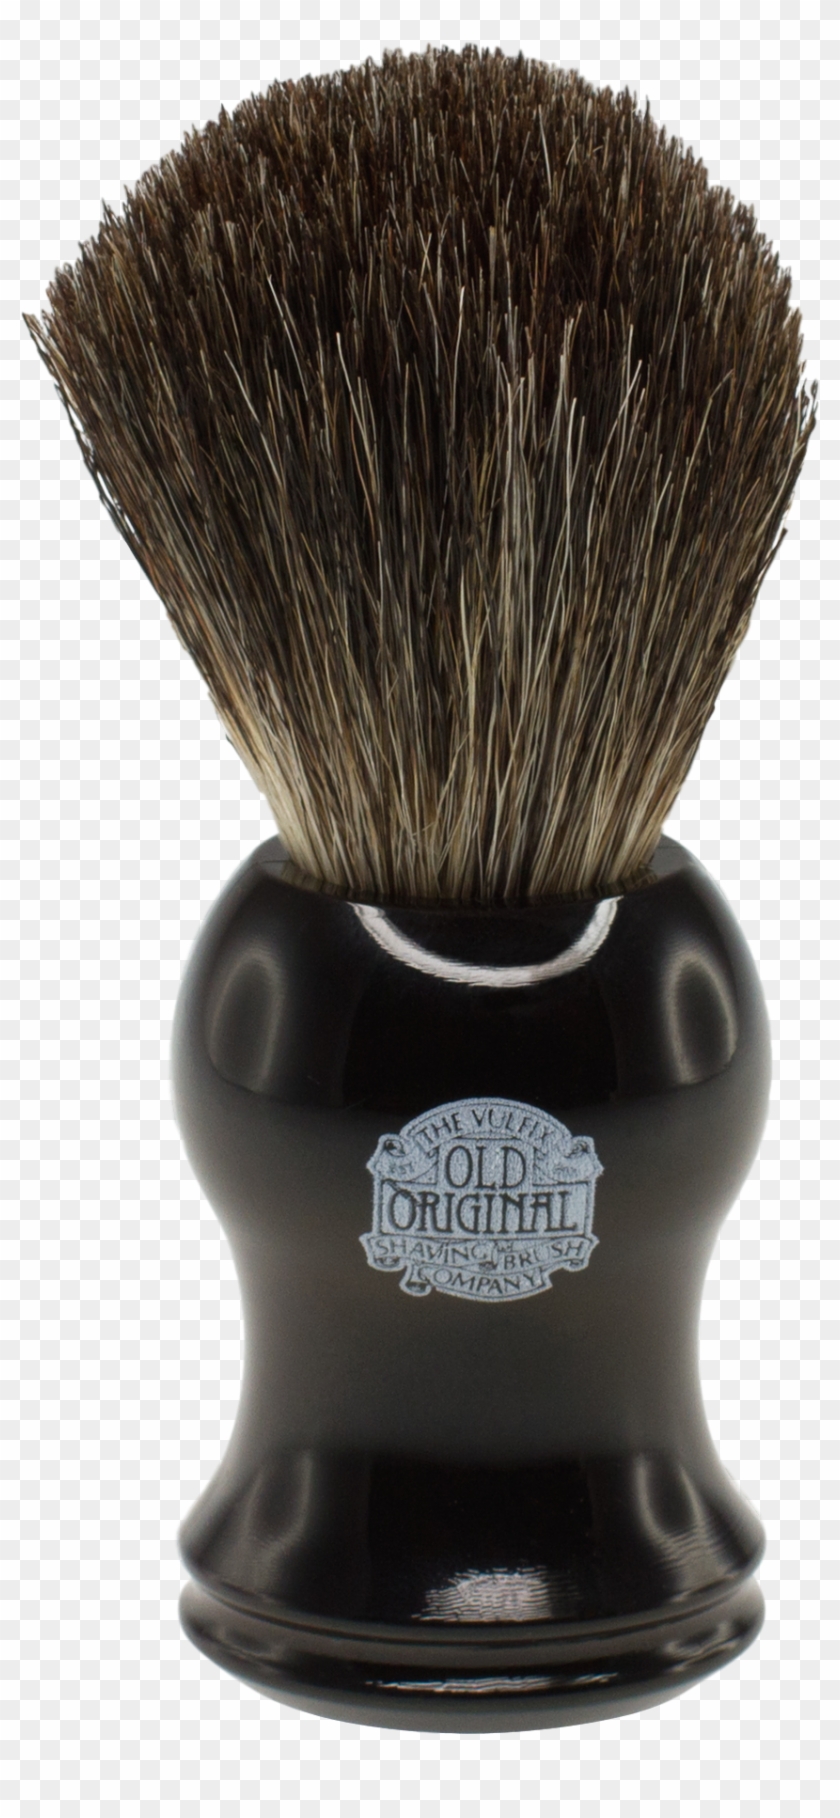 Progress Vulfix Pure Badger Shaving Brush, Black Handle - Shave Brush Clipart #2726439